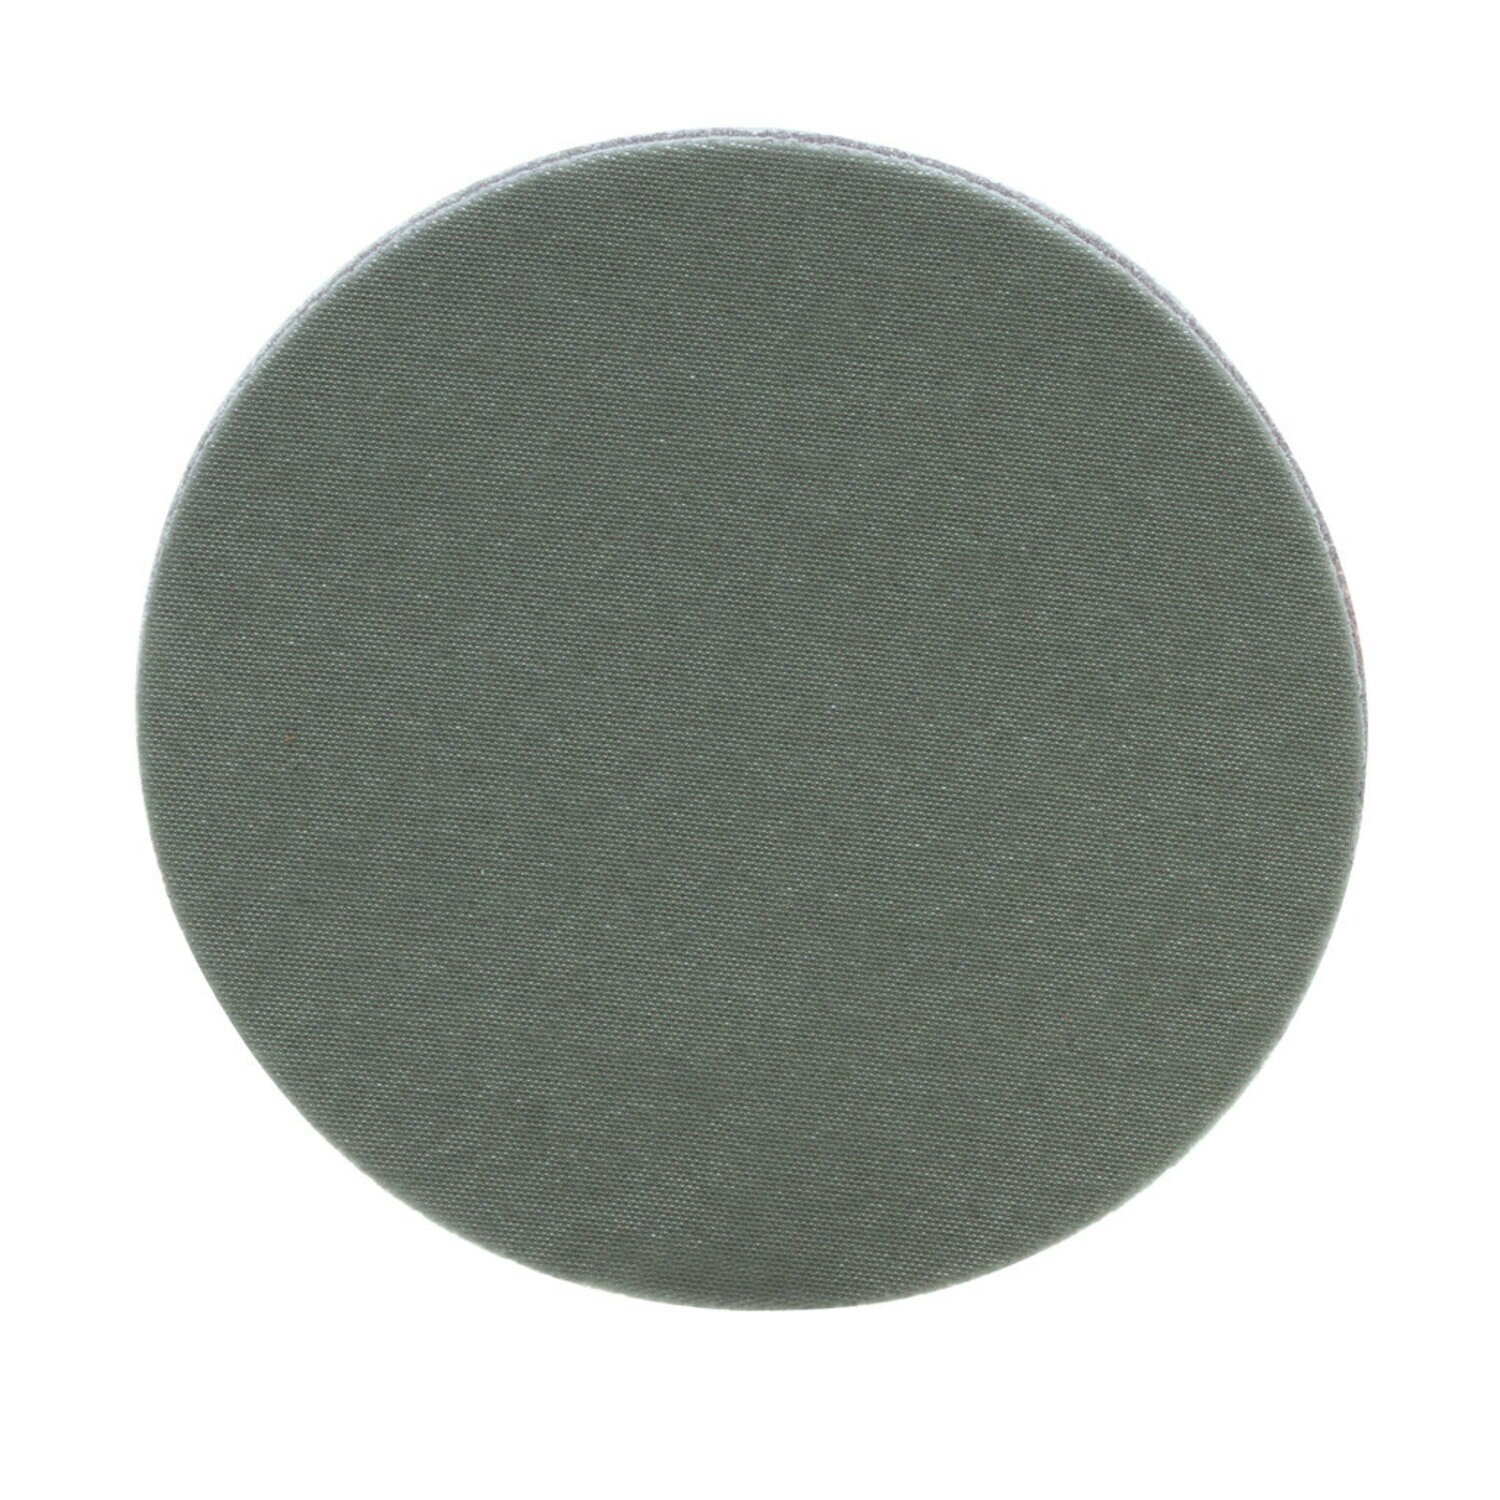 7100024859 - 3M Trizact Hookit Blending Abrasive Disc 02091, P1000, 3 in (75 mm),
15 Discs/Carton, 4 Cartons/Case